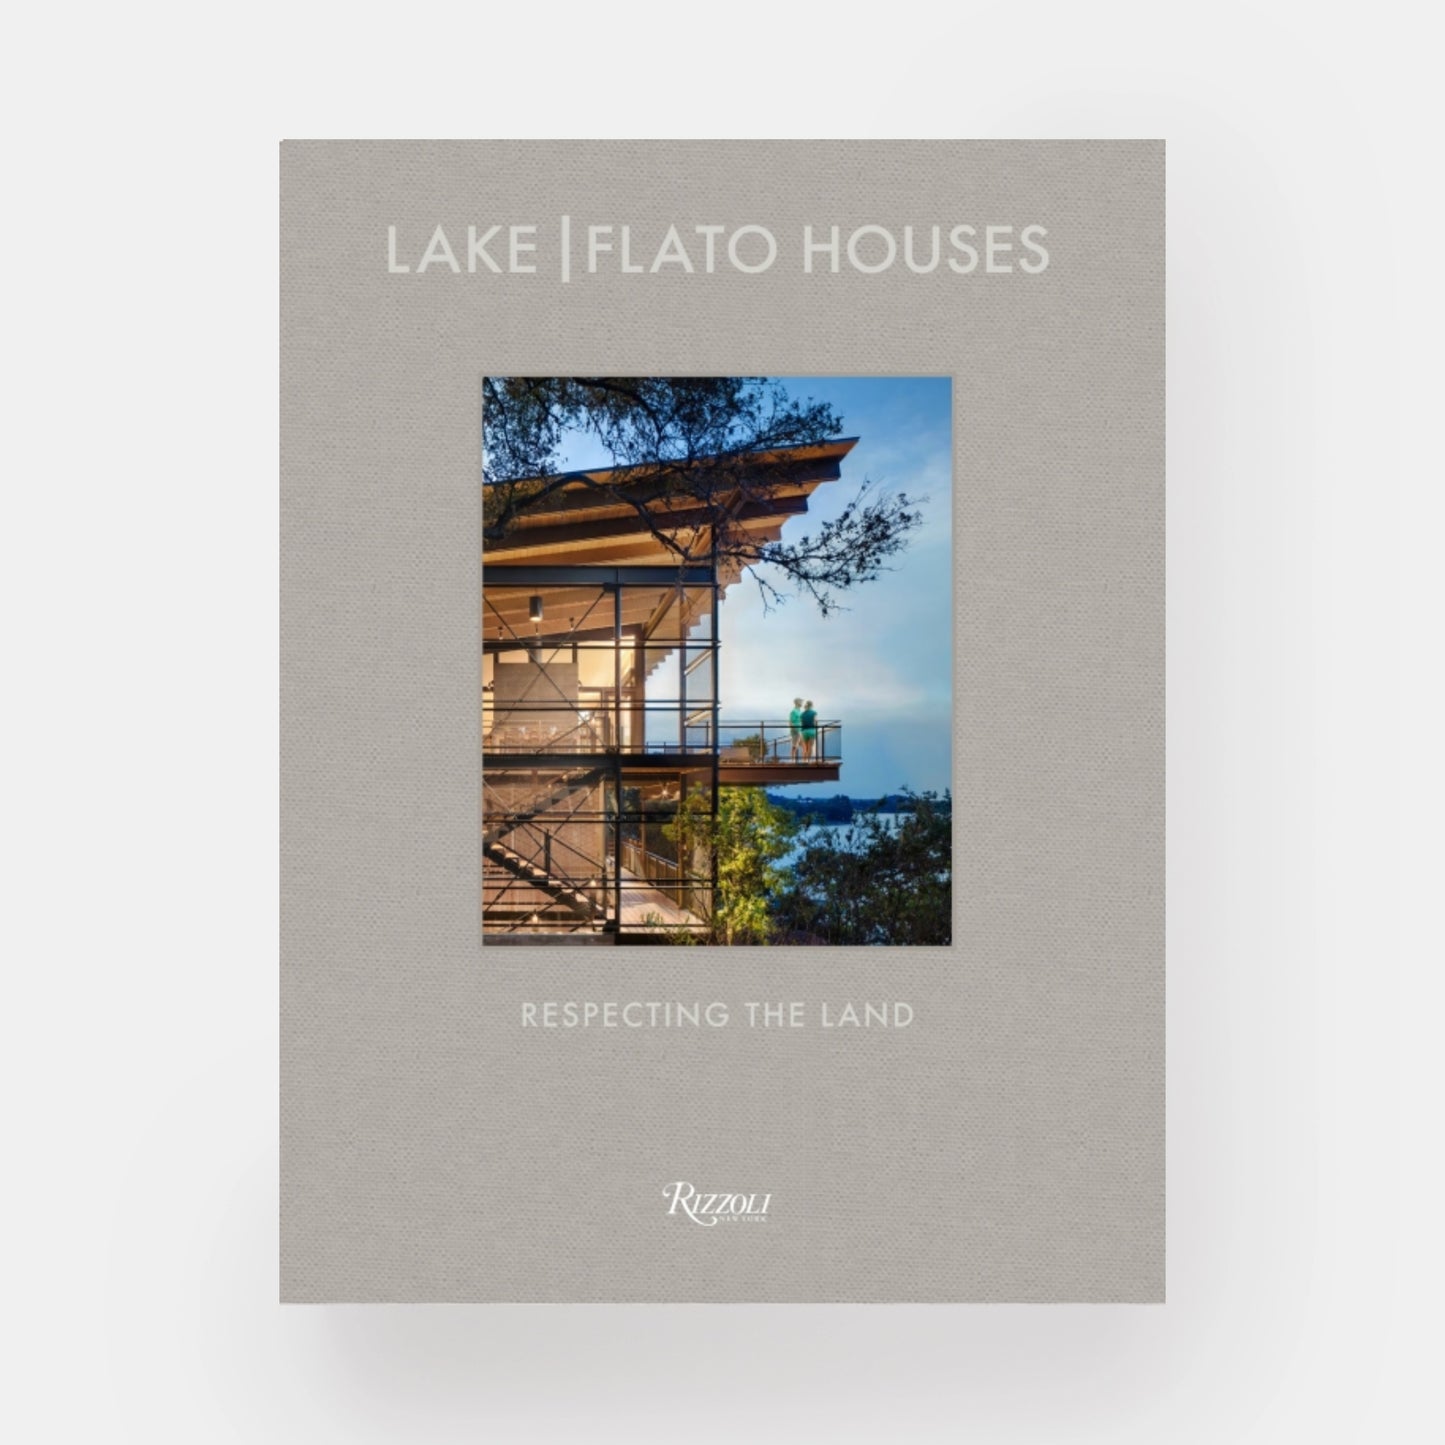 Lake Flato Houses: Respecting the Land